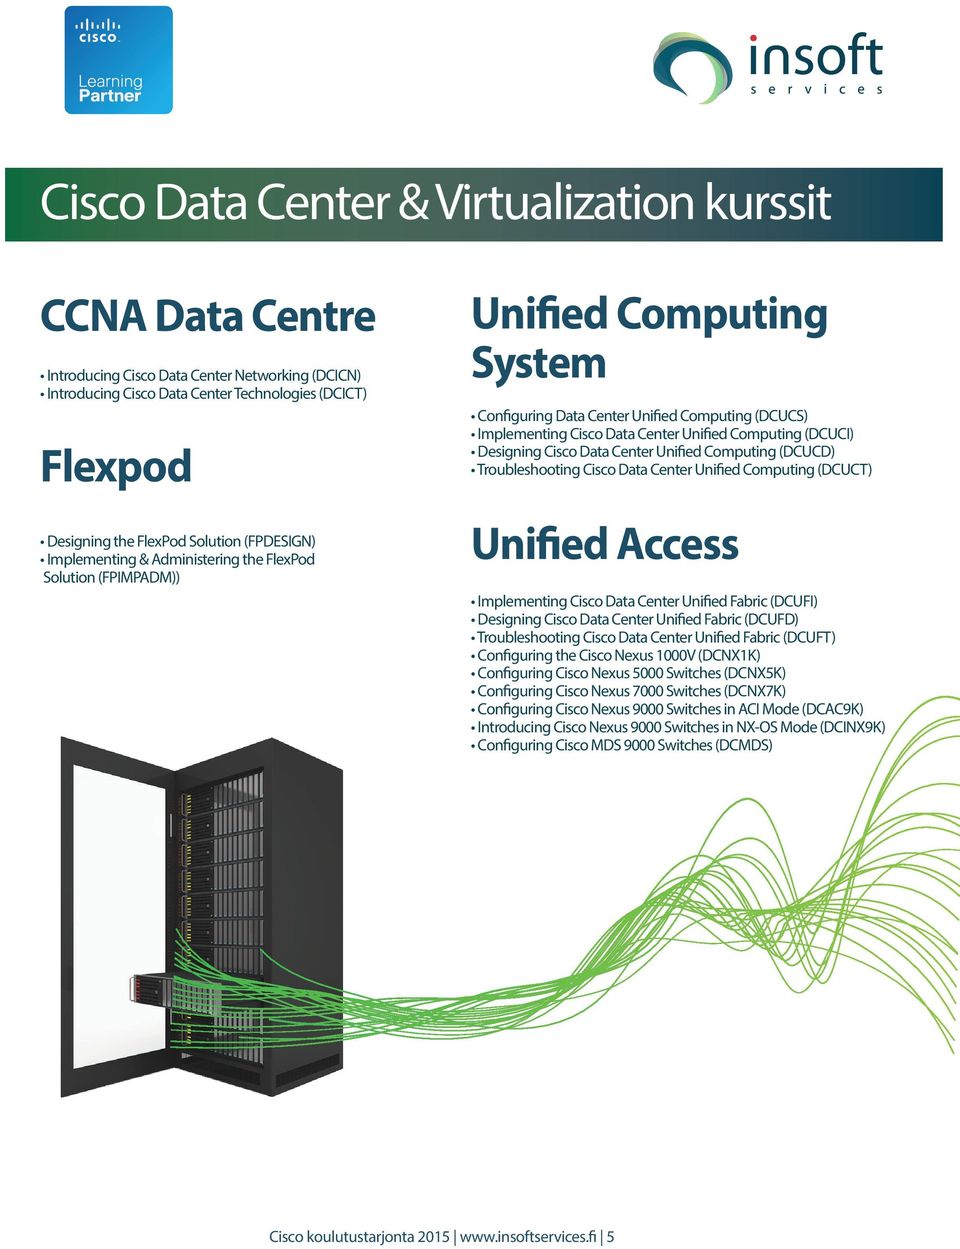 (DCUCI) Designing Cisco Data Center Unified Computing (DCUCD) Troubleshooting Cisco Data Center Unified Computing (DCUCT) Unified Access Implementing Cisco Data Center Unified Fabric (DCUFI)